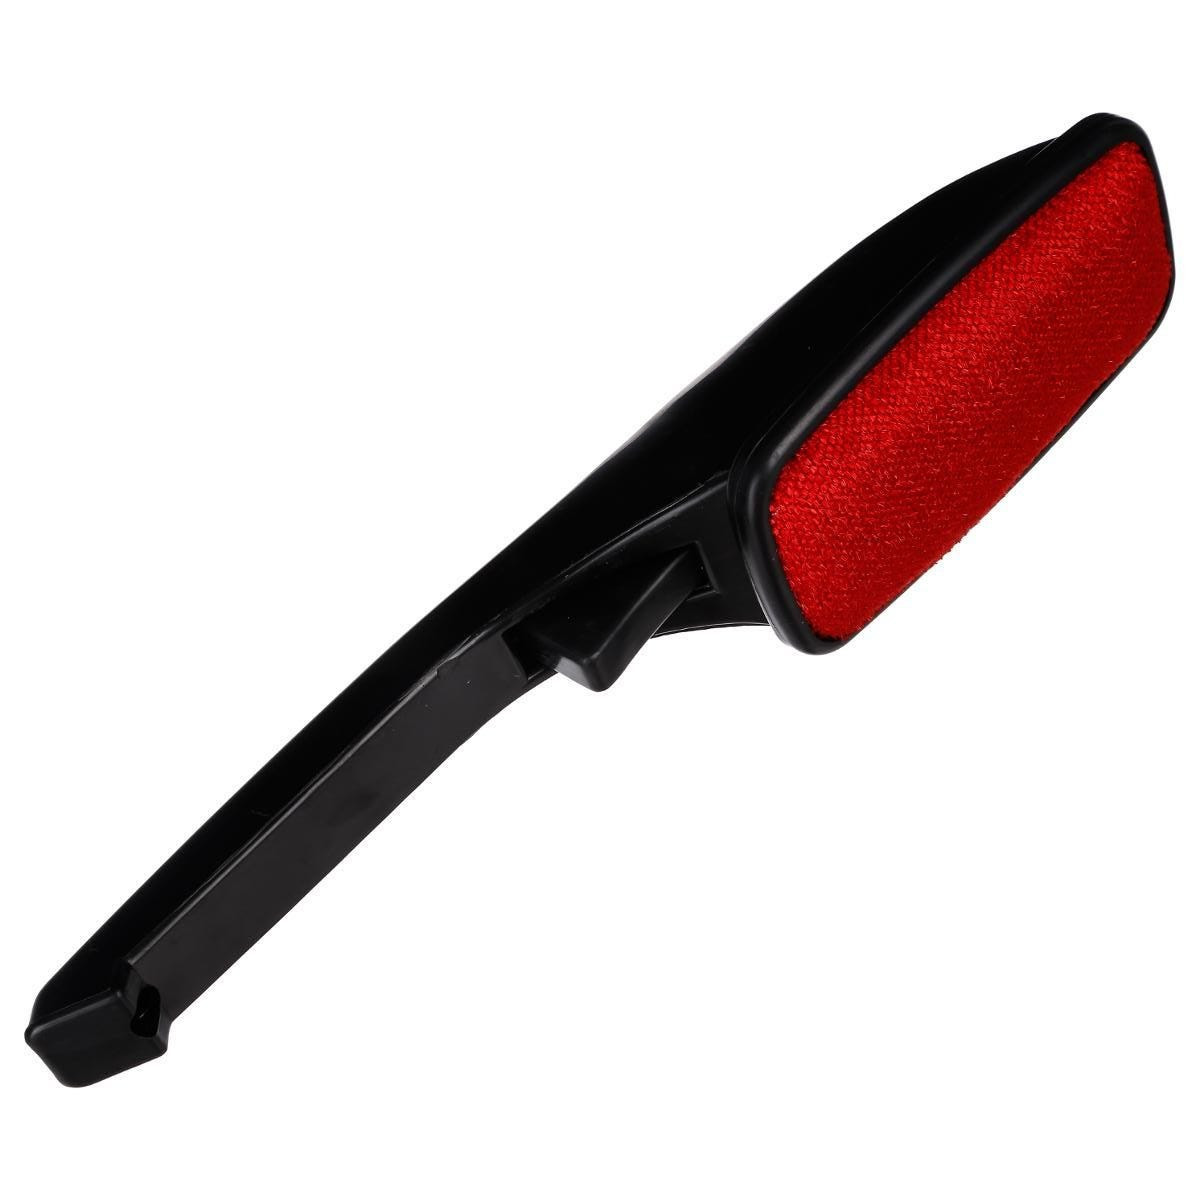 2x Stuks kledingborstel-pluizenborstel zwart-rood 25 cm met roterende kop